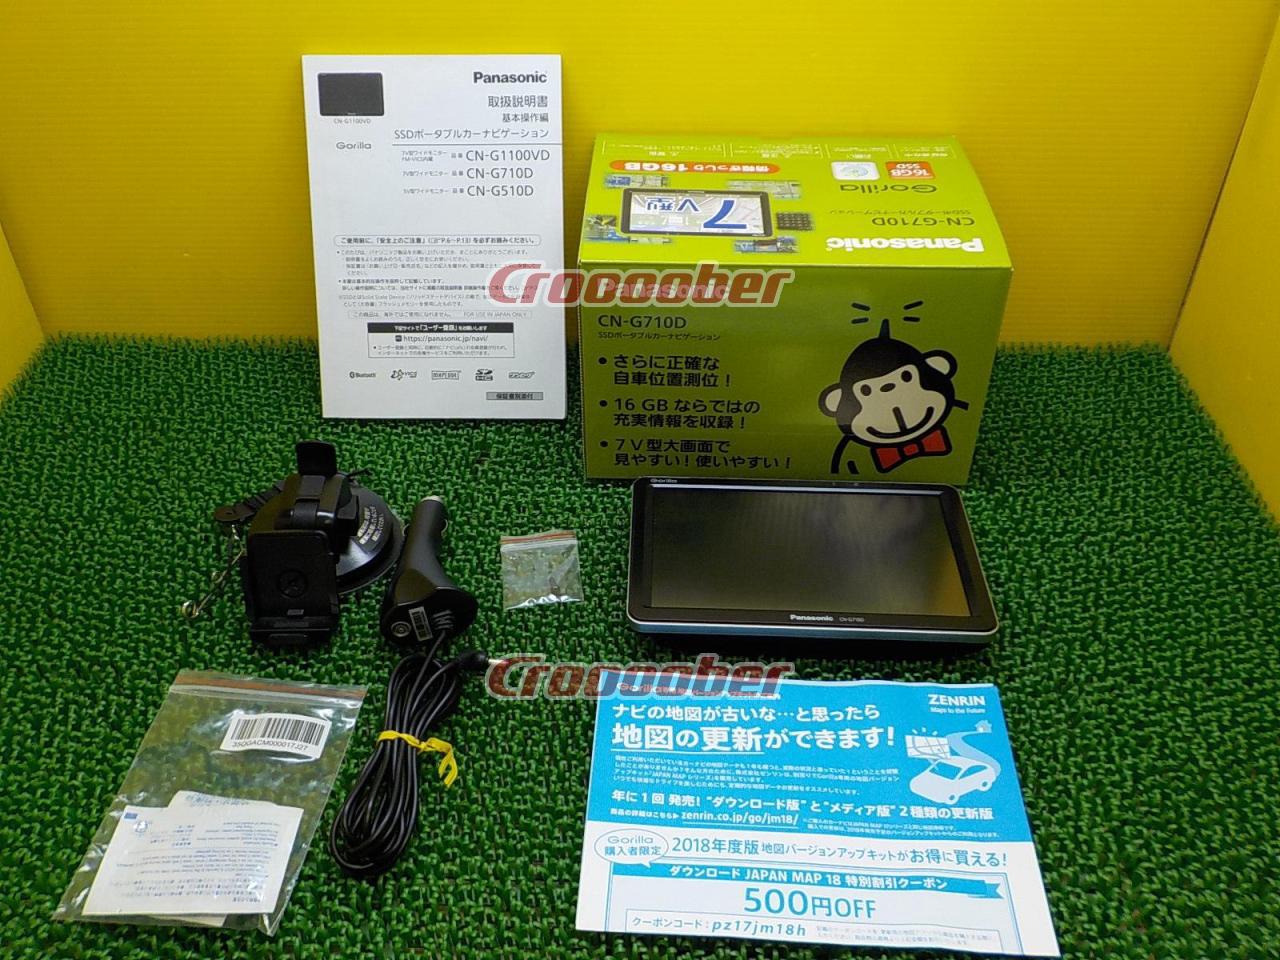 Panasonic CN-G710D Gorilla Portable Navigation | Portable